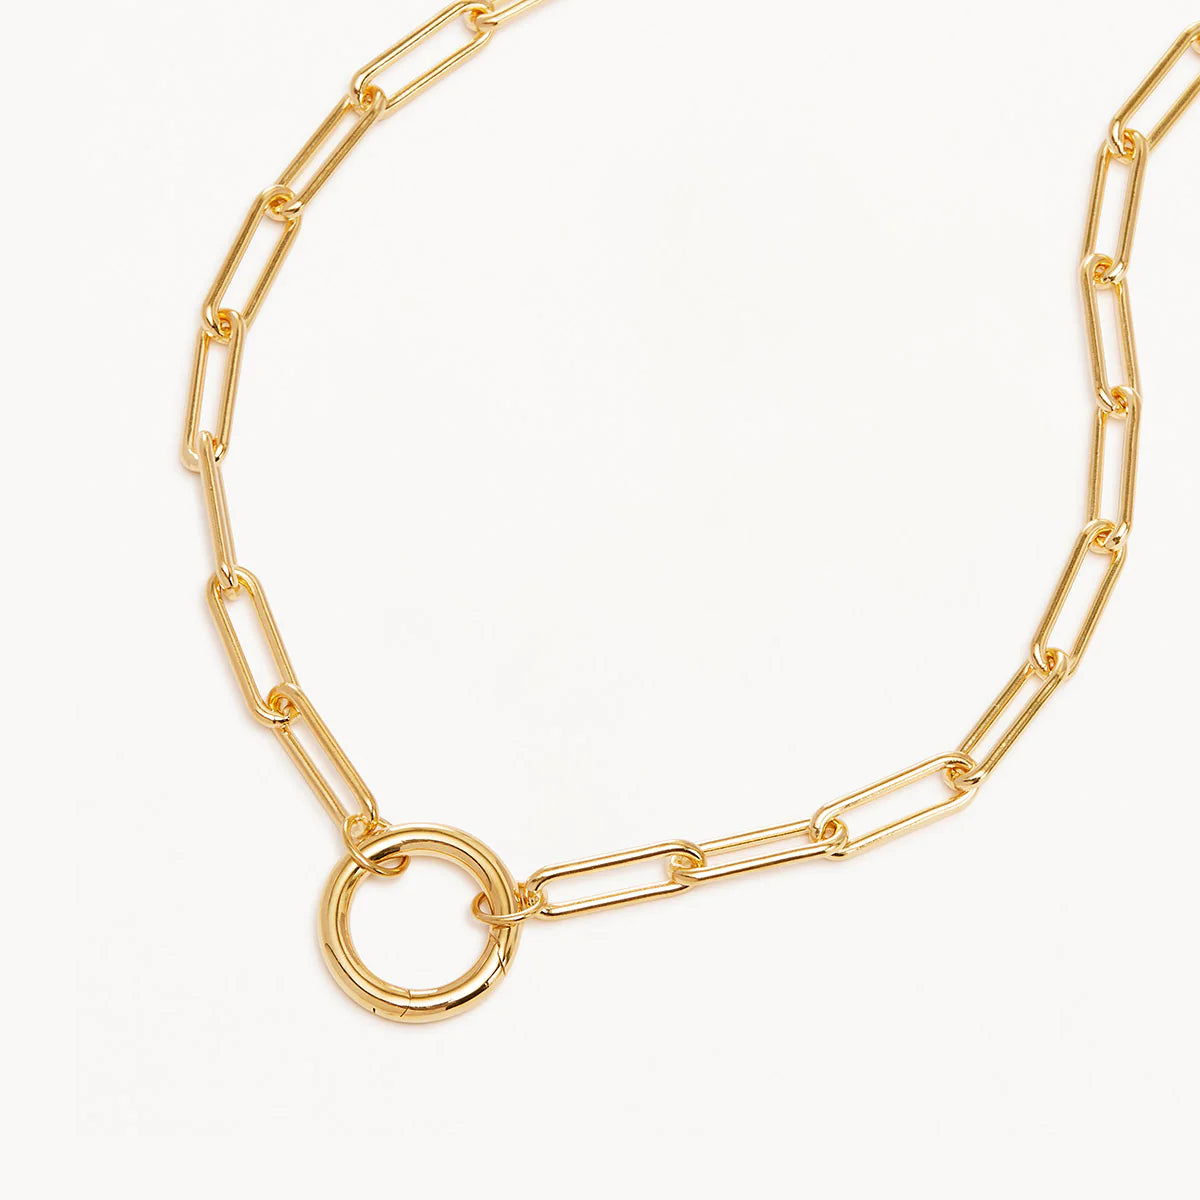 18" With Love Annex Link Necklace - 18k Gold Vermeil